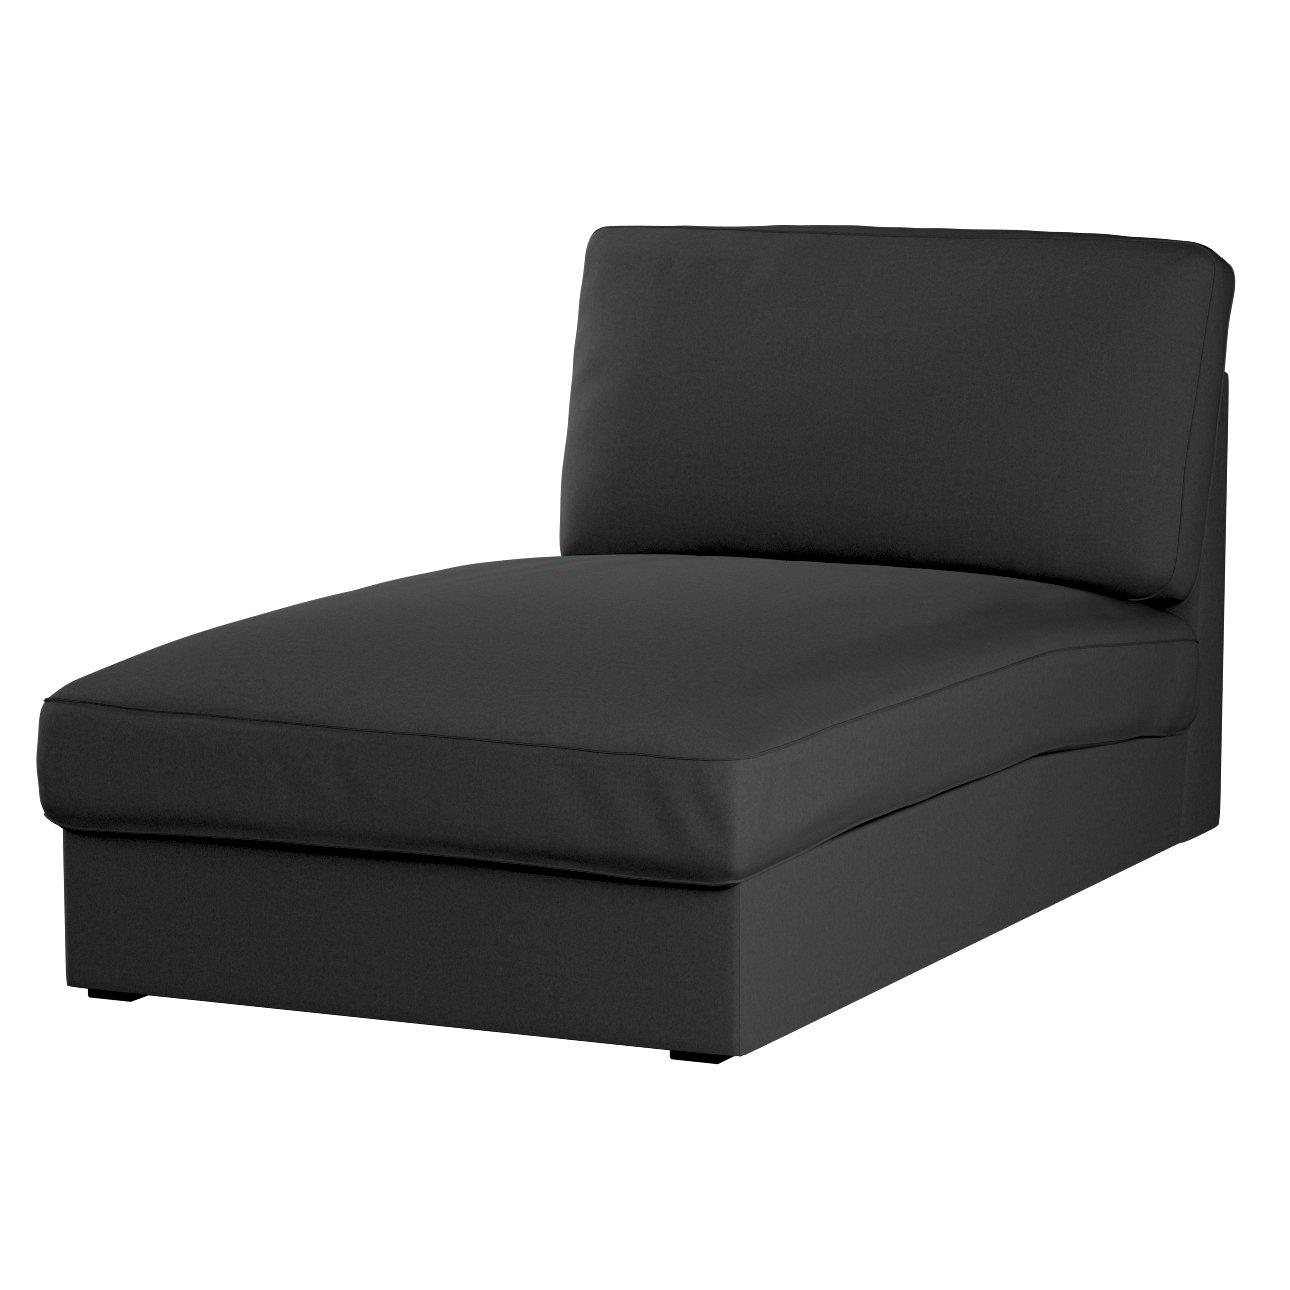 Bezug für Kivik Recamiere Sofa, schwarz, Bezug für Kivik Recamiere, Living günstig online kaufen